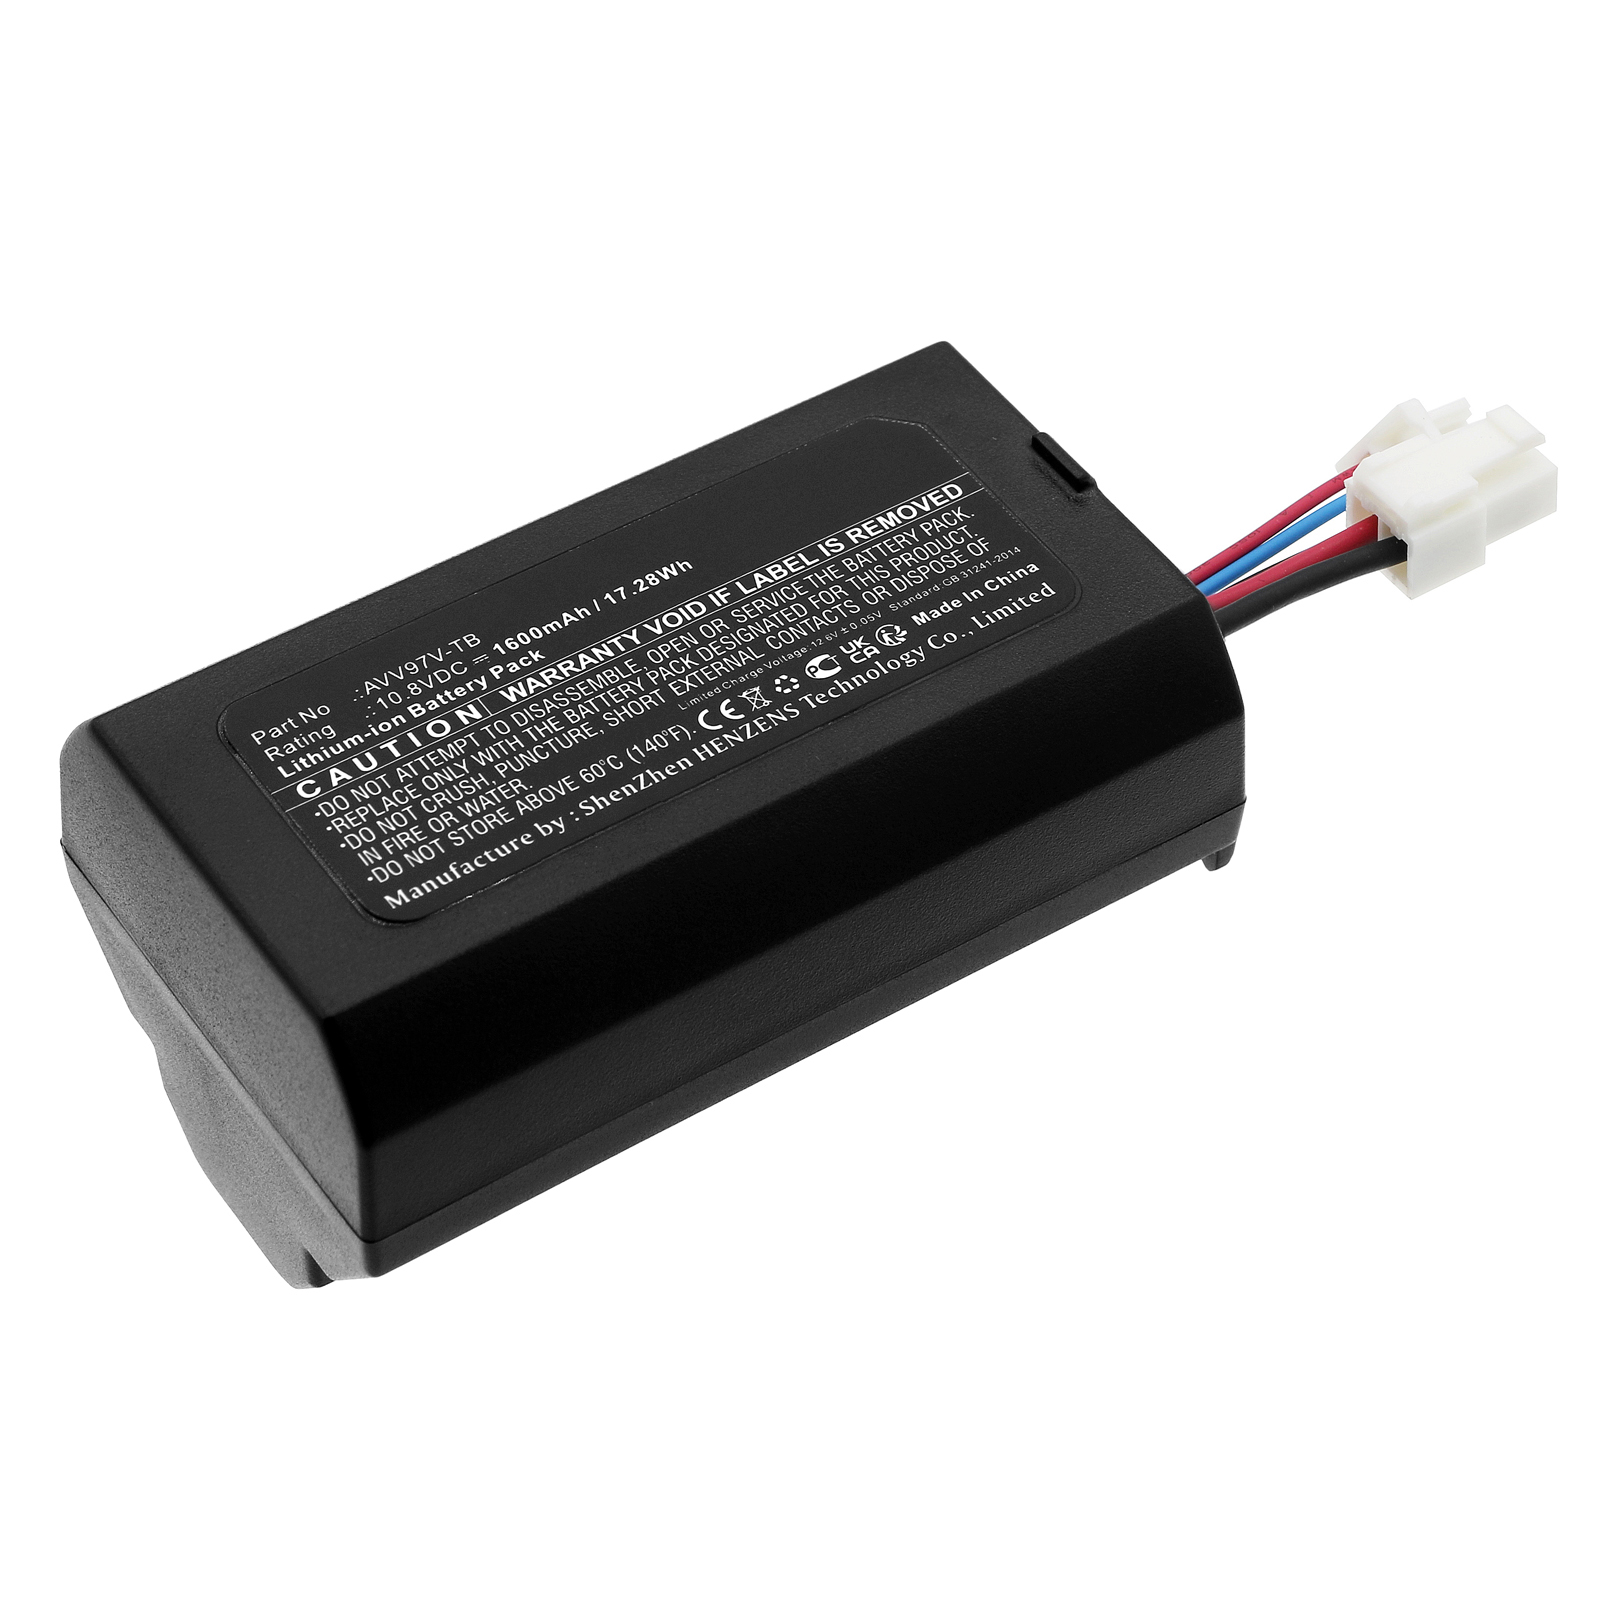 Synergy Digital Vacuum Cleaner Battery, Compatible with Panasonic AVV97V-TB Vacuum Cleaner Battery (Li-ion, 10.8V, 1600mAh)